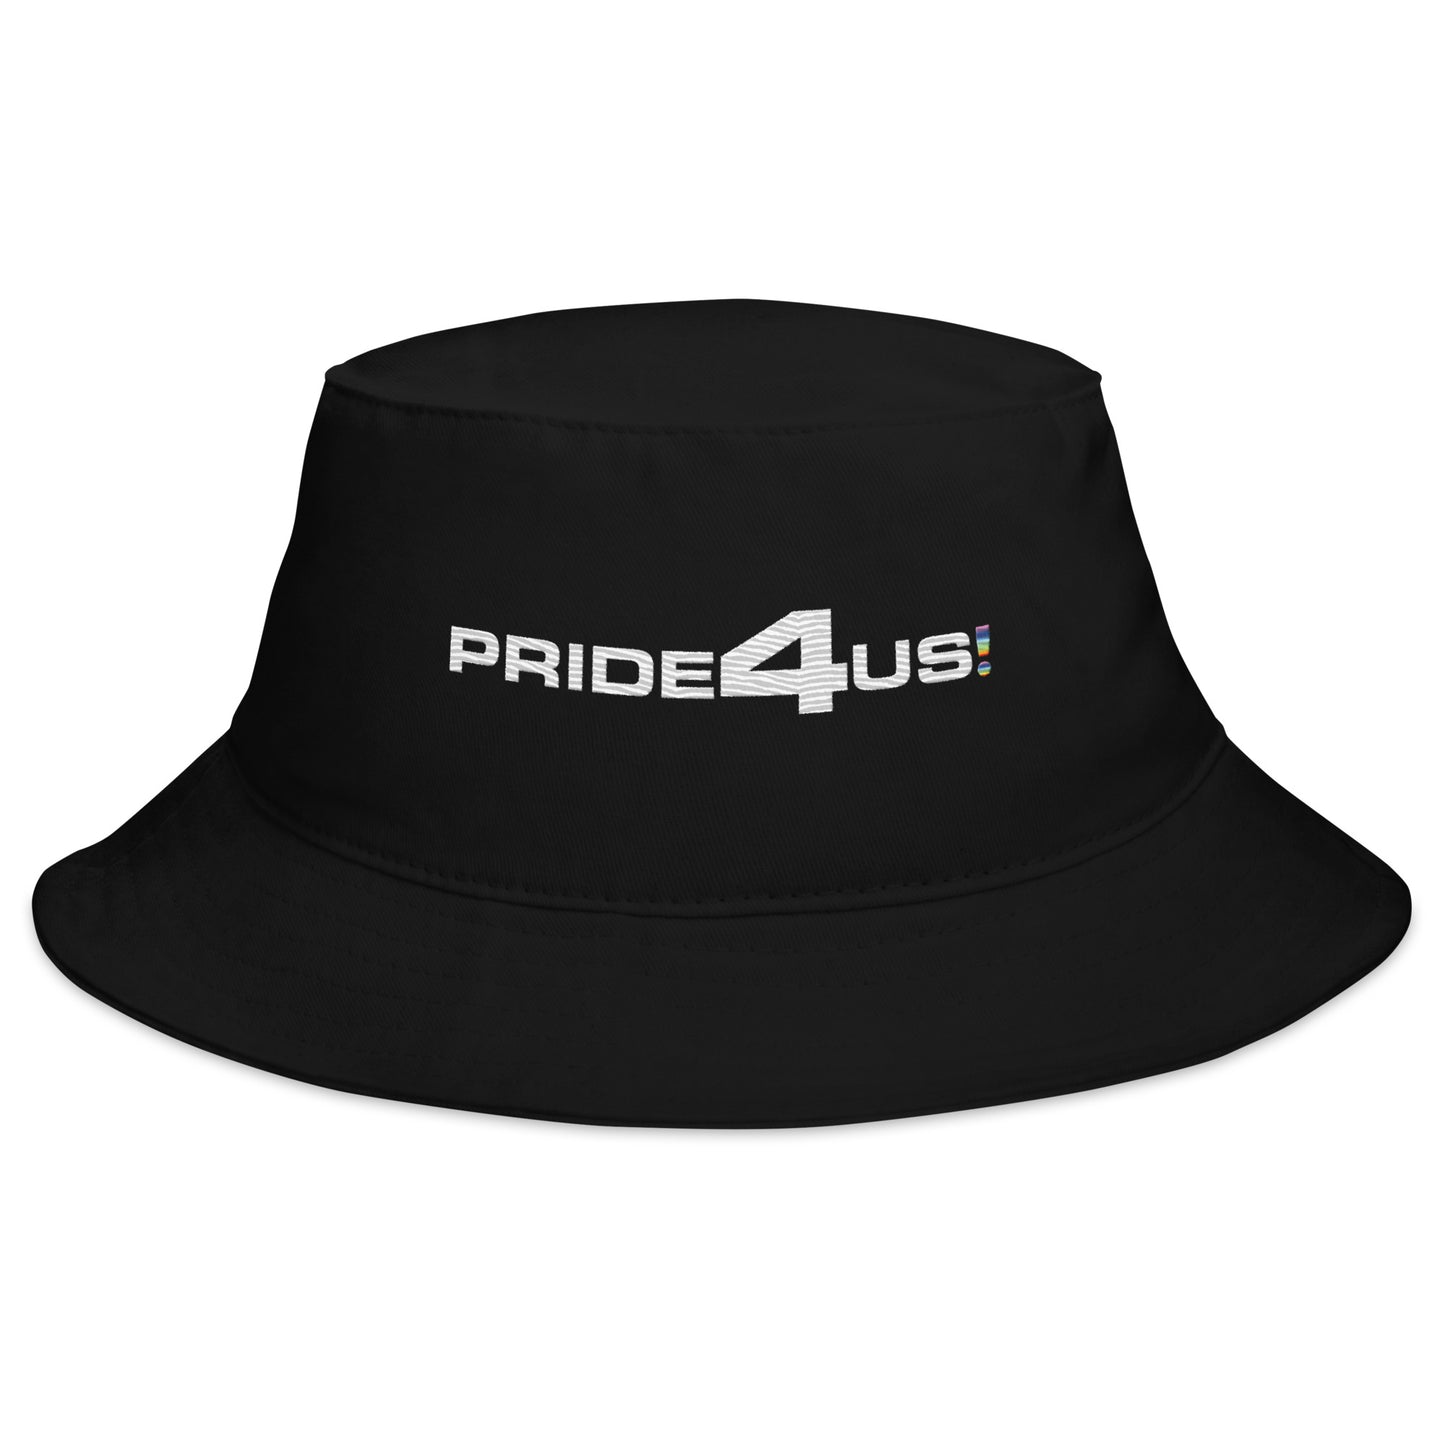 Bucket Hat - Pride4Us 2.0